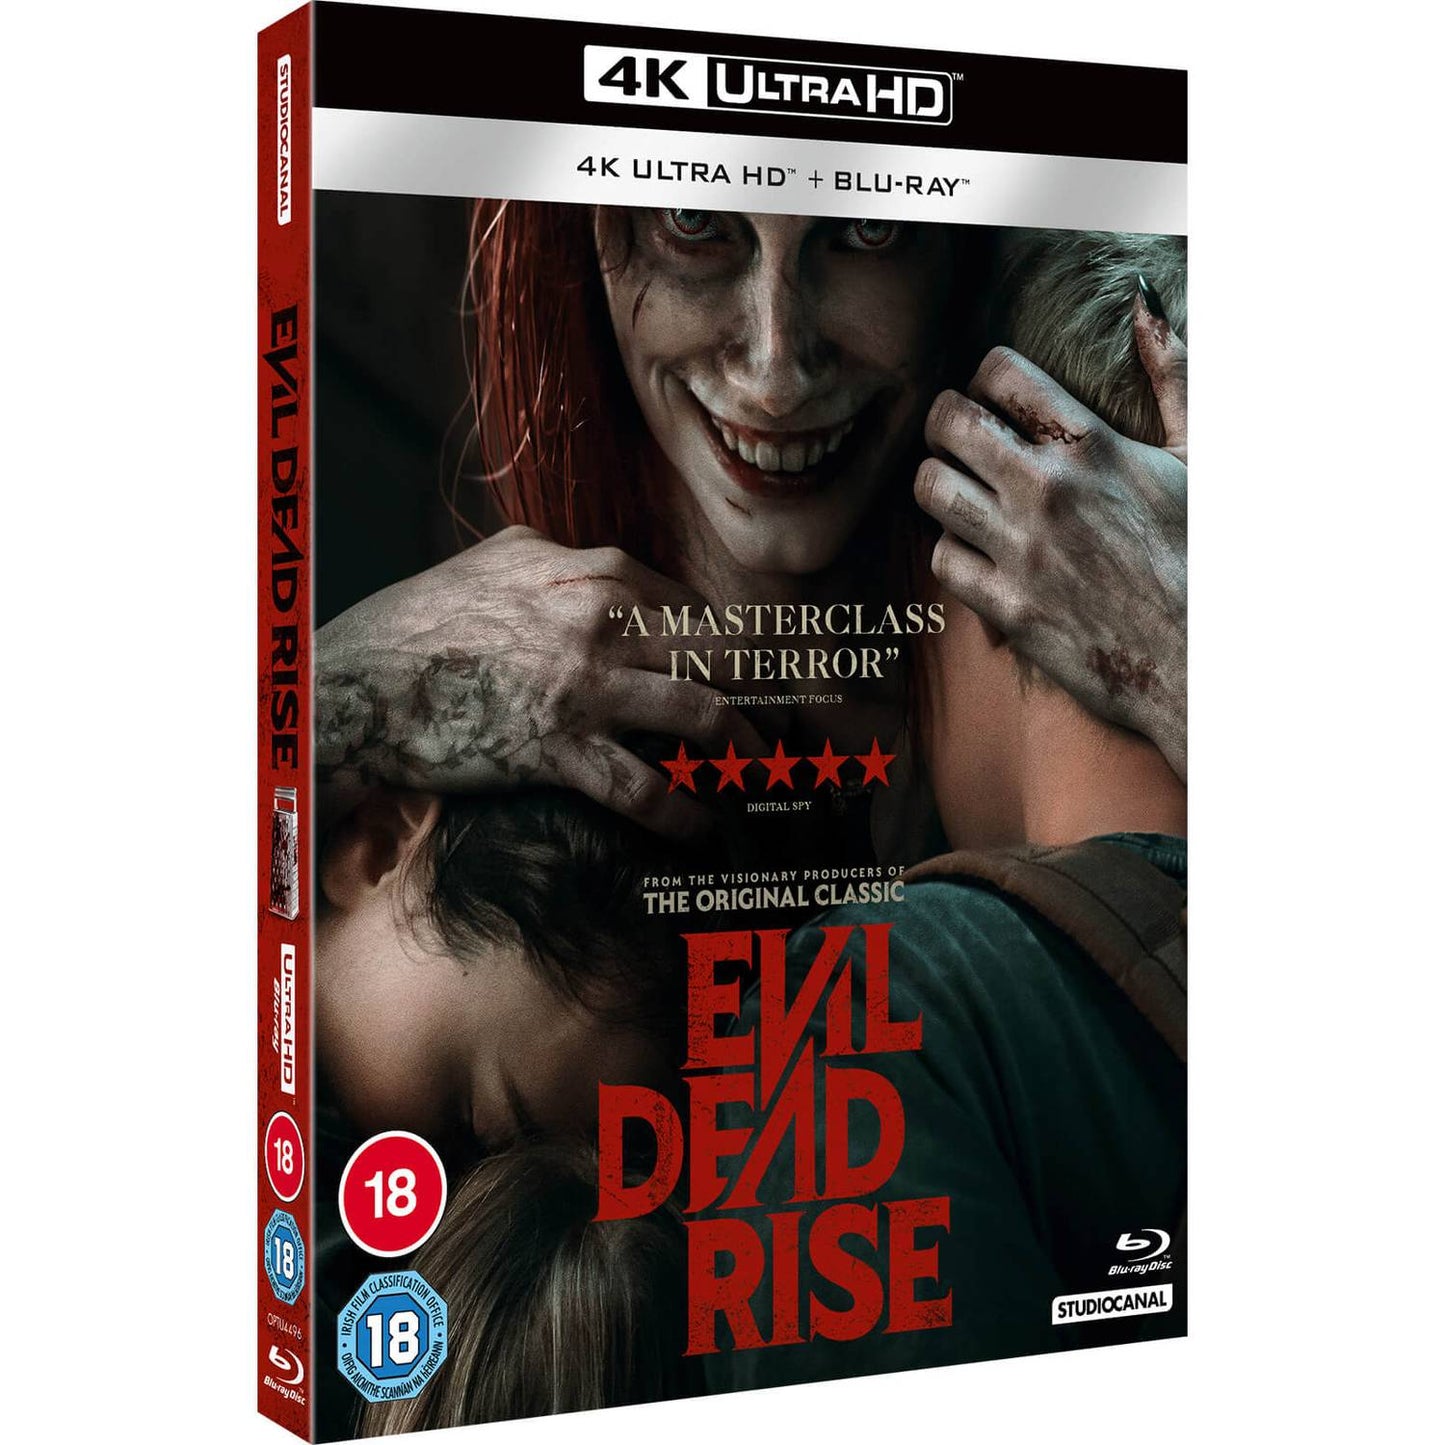 MovieTalk: Evil Dead Rise - The Free Press